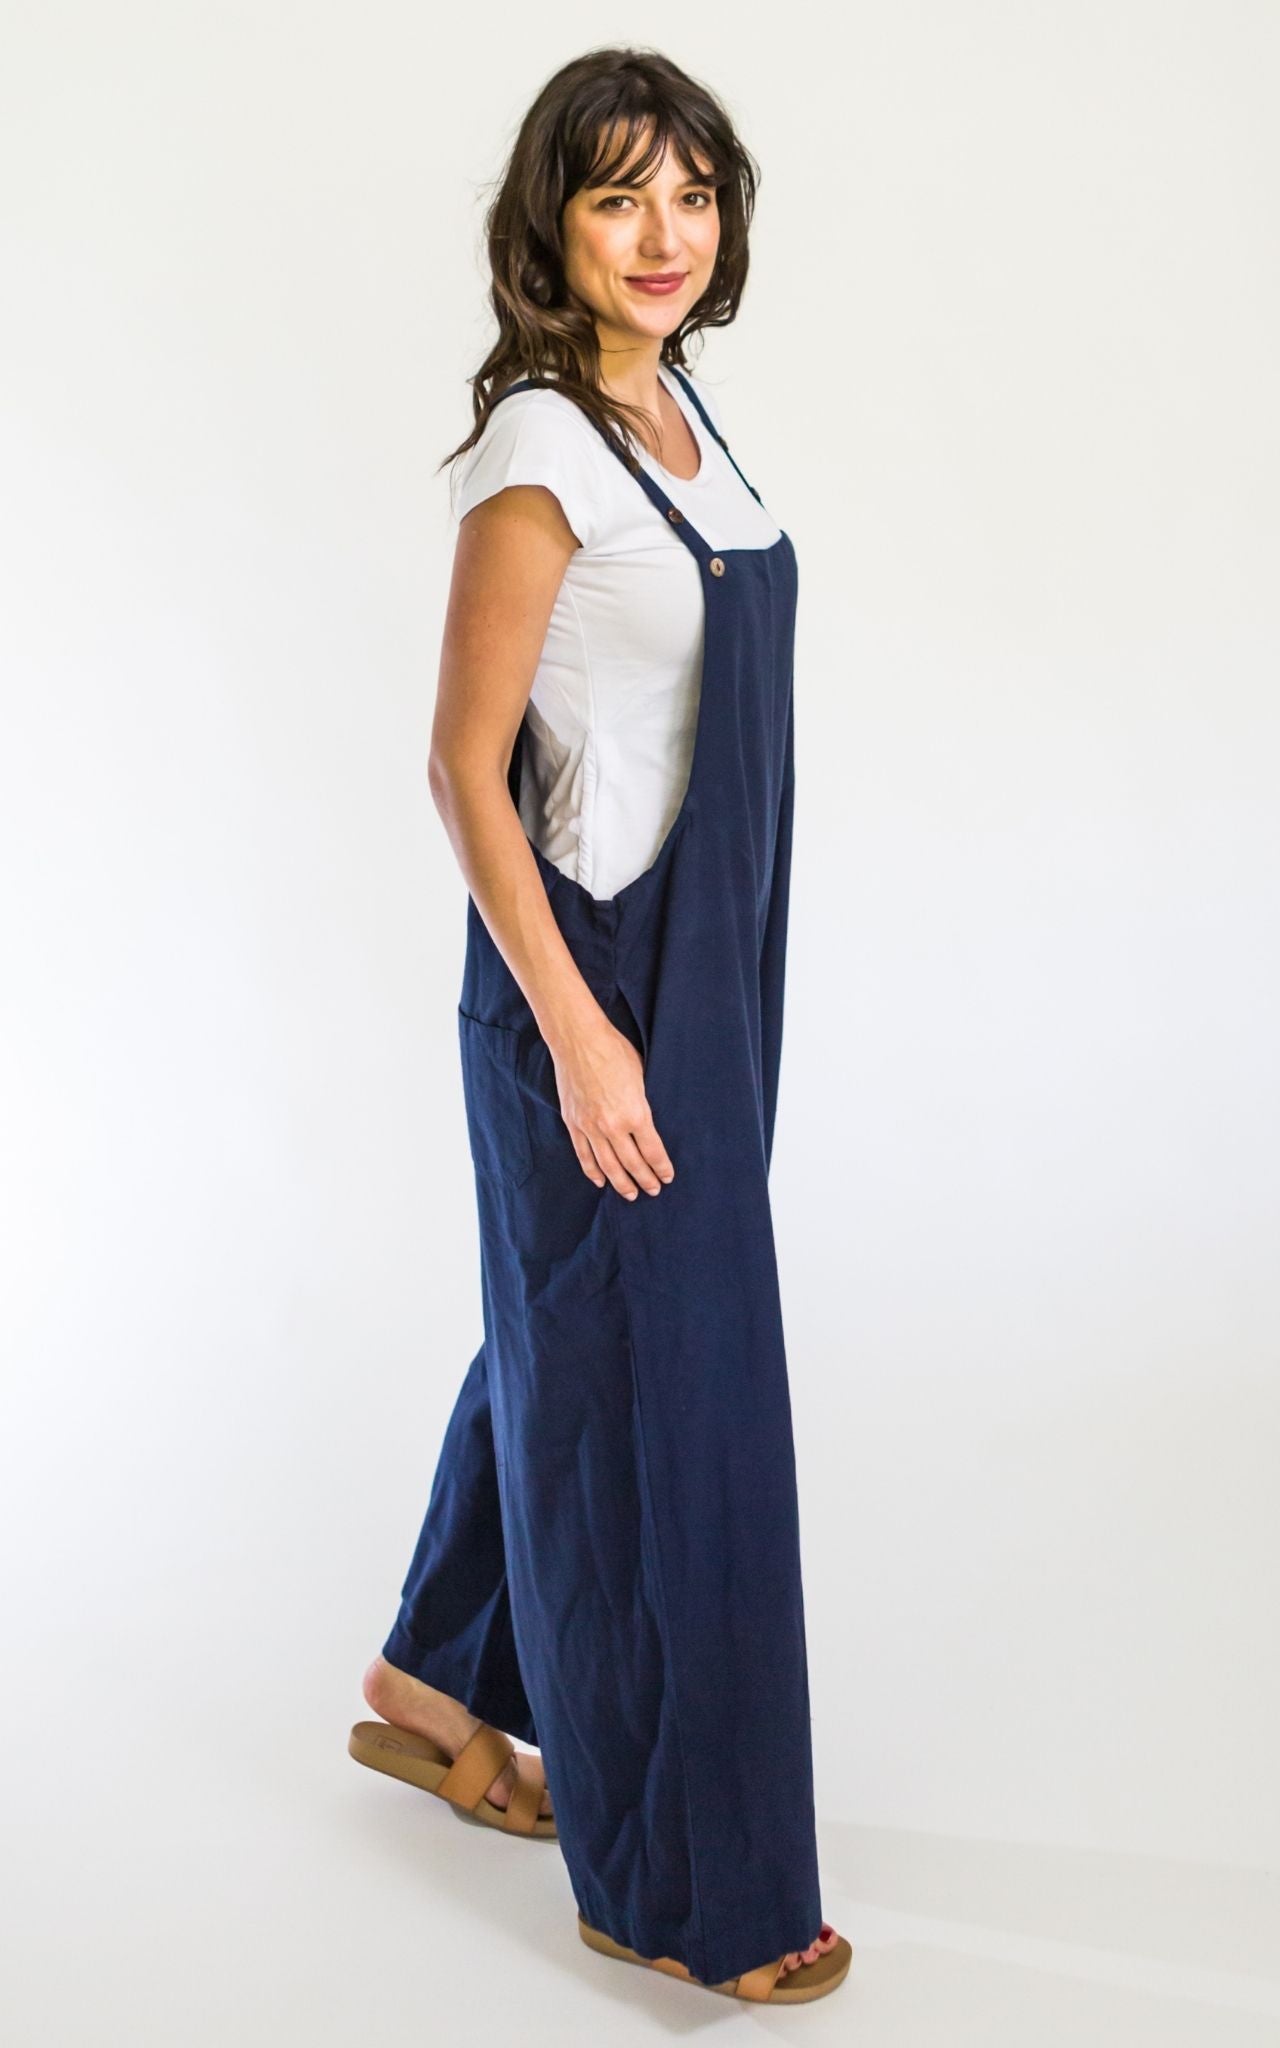 Surya Australia Ethical Cotton 'Juanita' Overalls Dungarees made in Nepal - Dark Blue